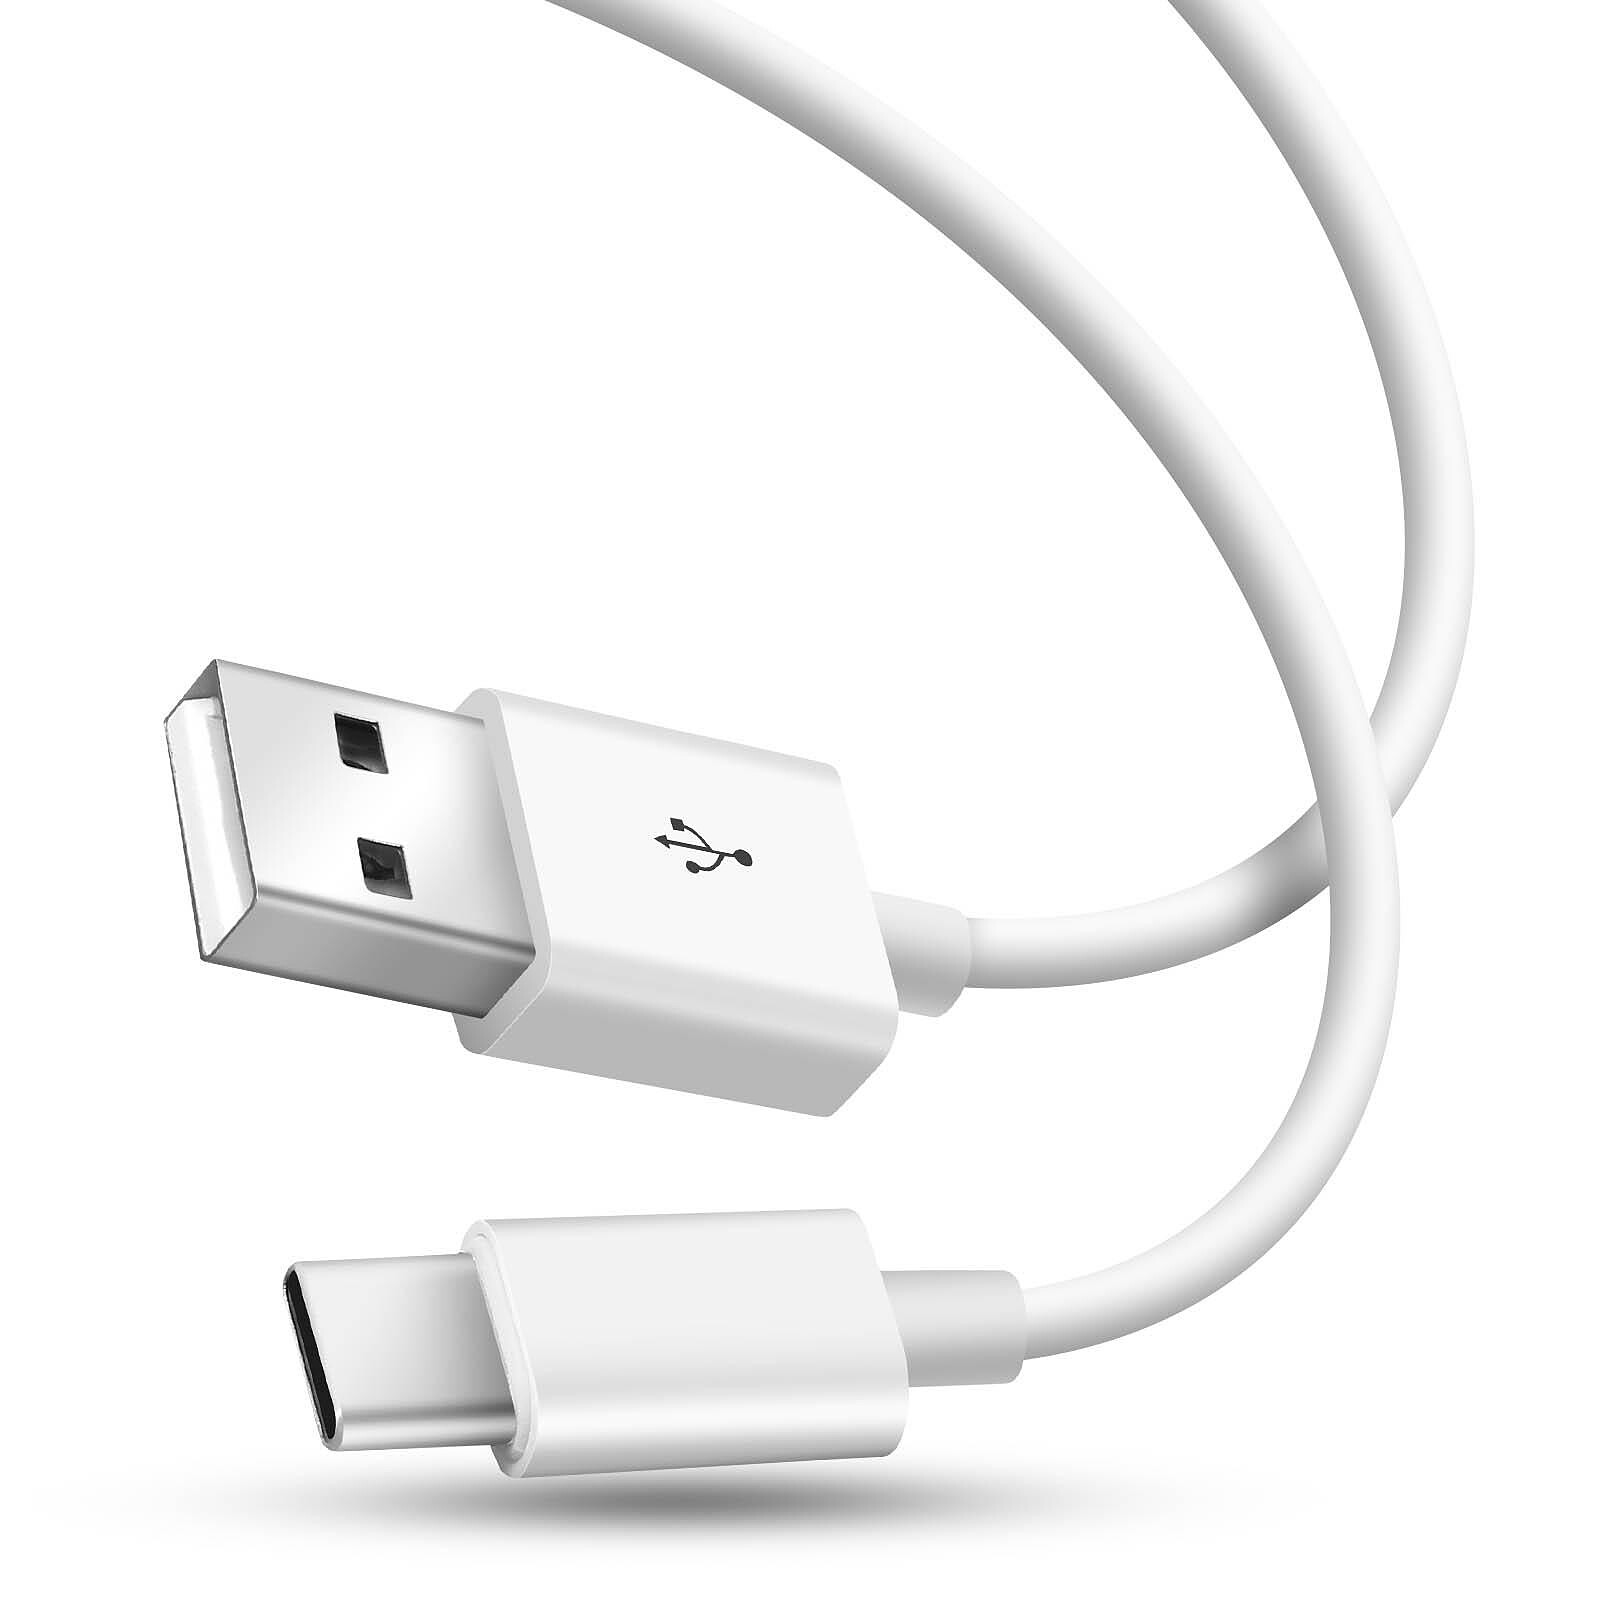 Câble USB 3.1 type C mâle / mâle - 2m Blanc Longueur Câble 2 m